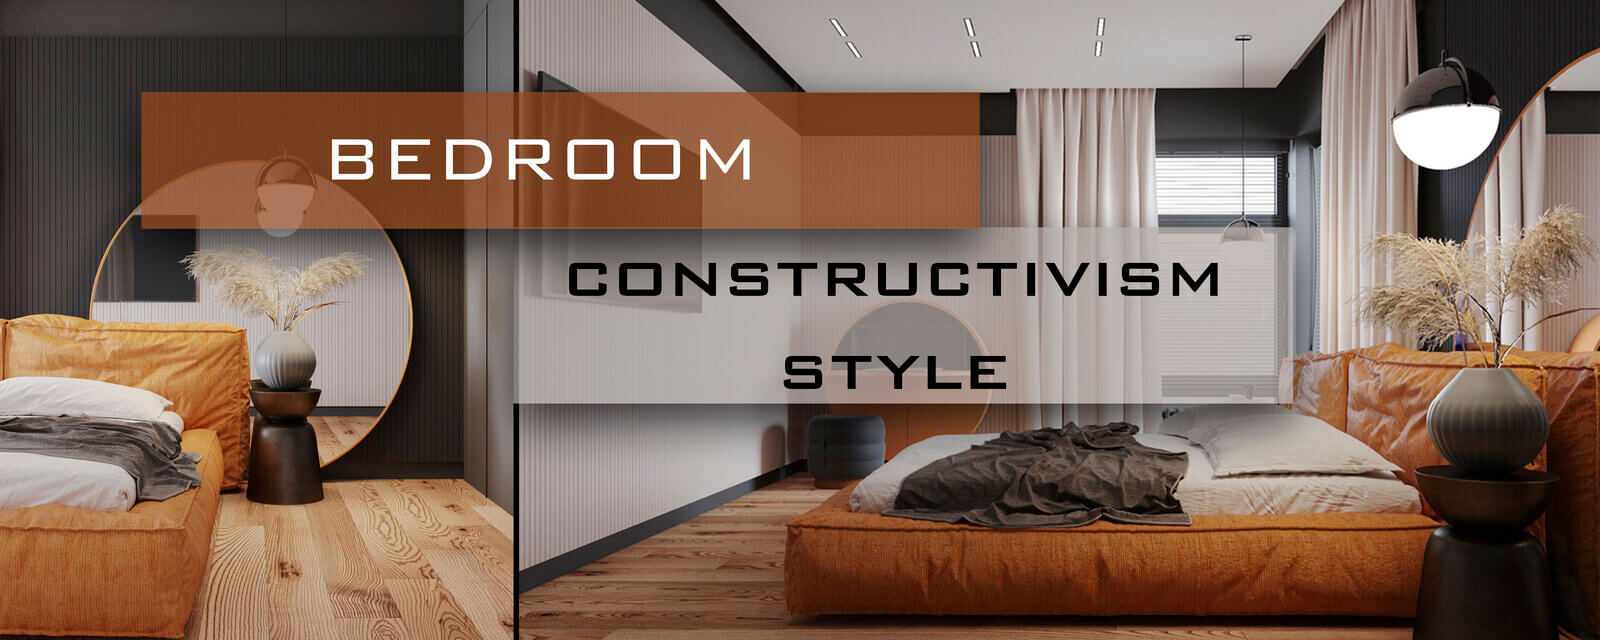 Constructivism Style | Bedroom